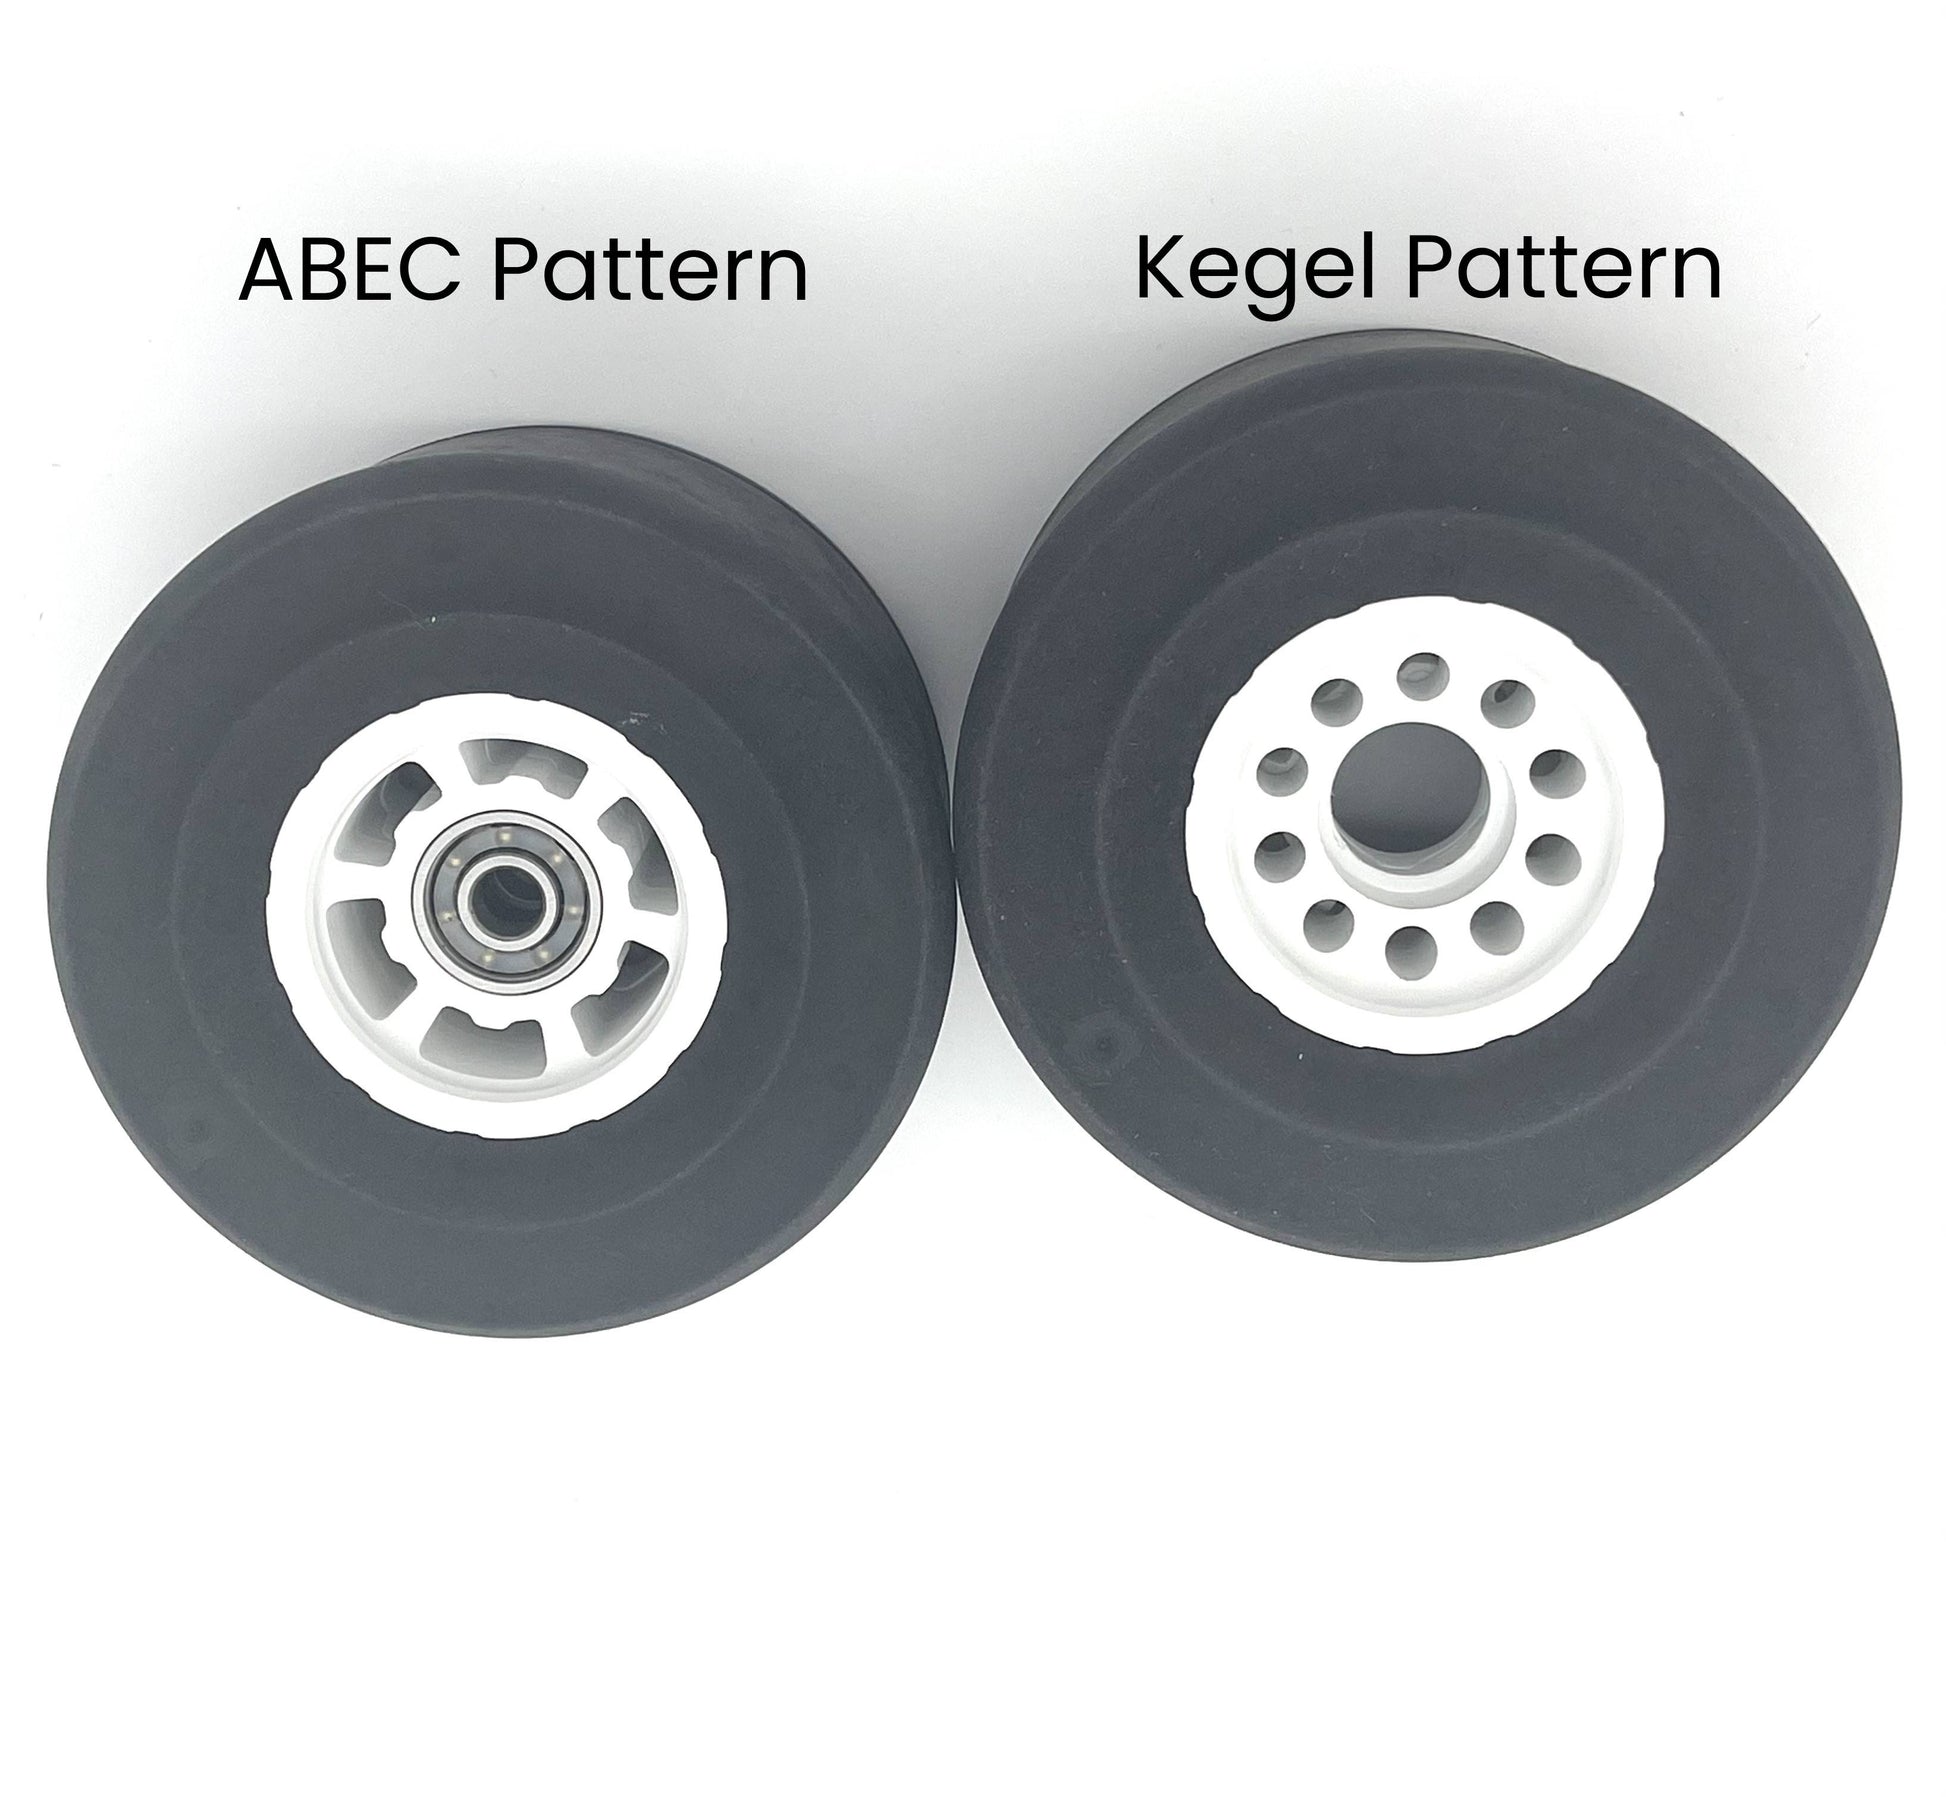 abec and kegel compatible wheels